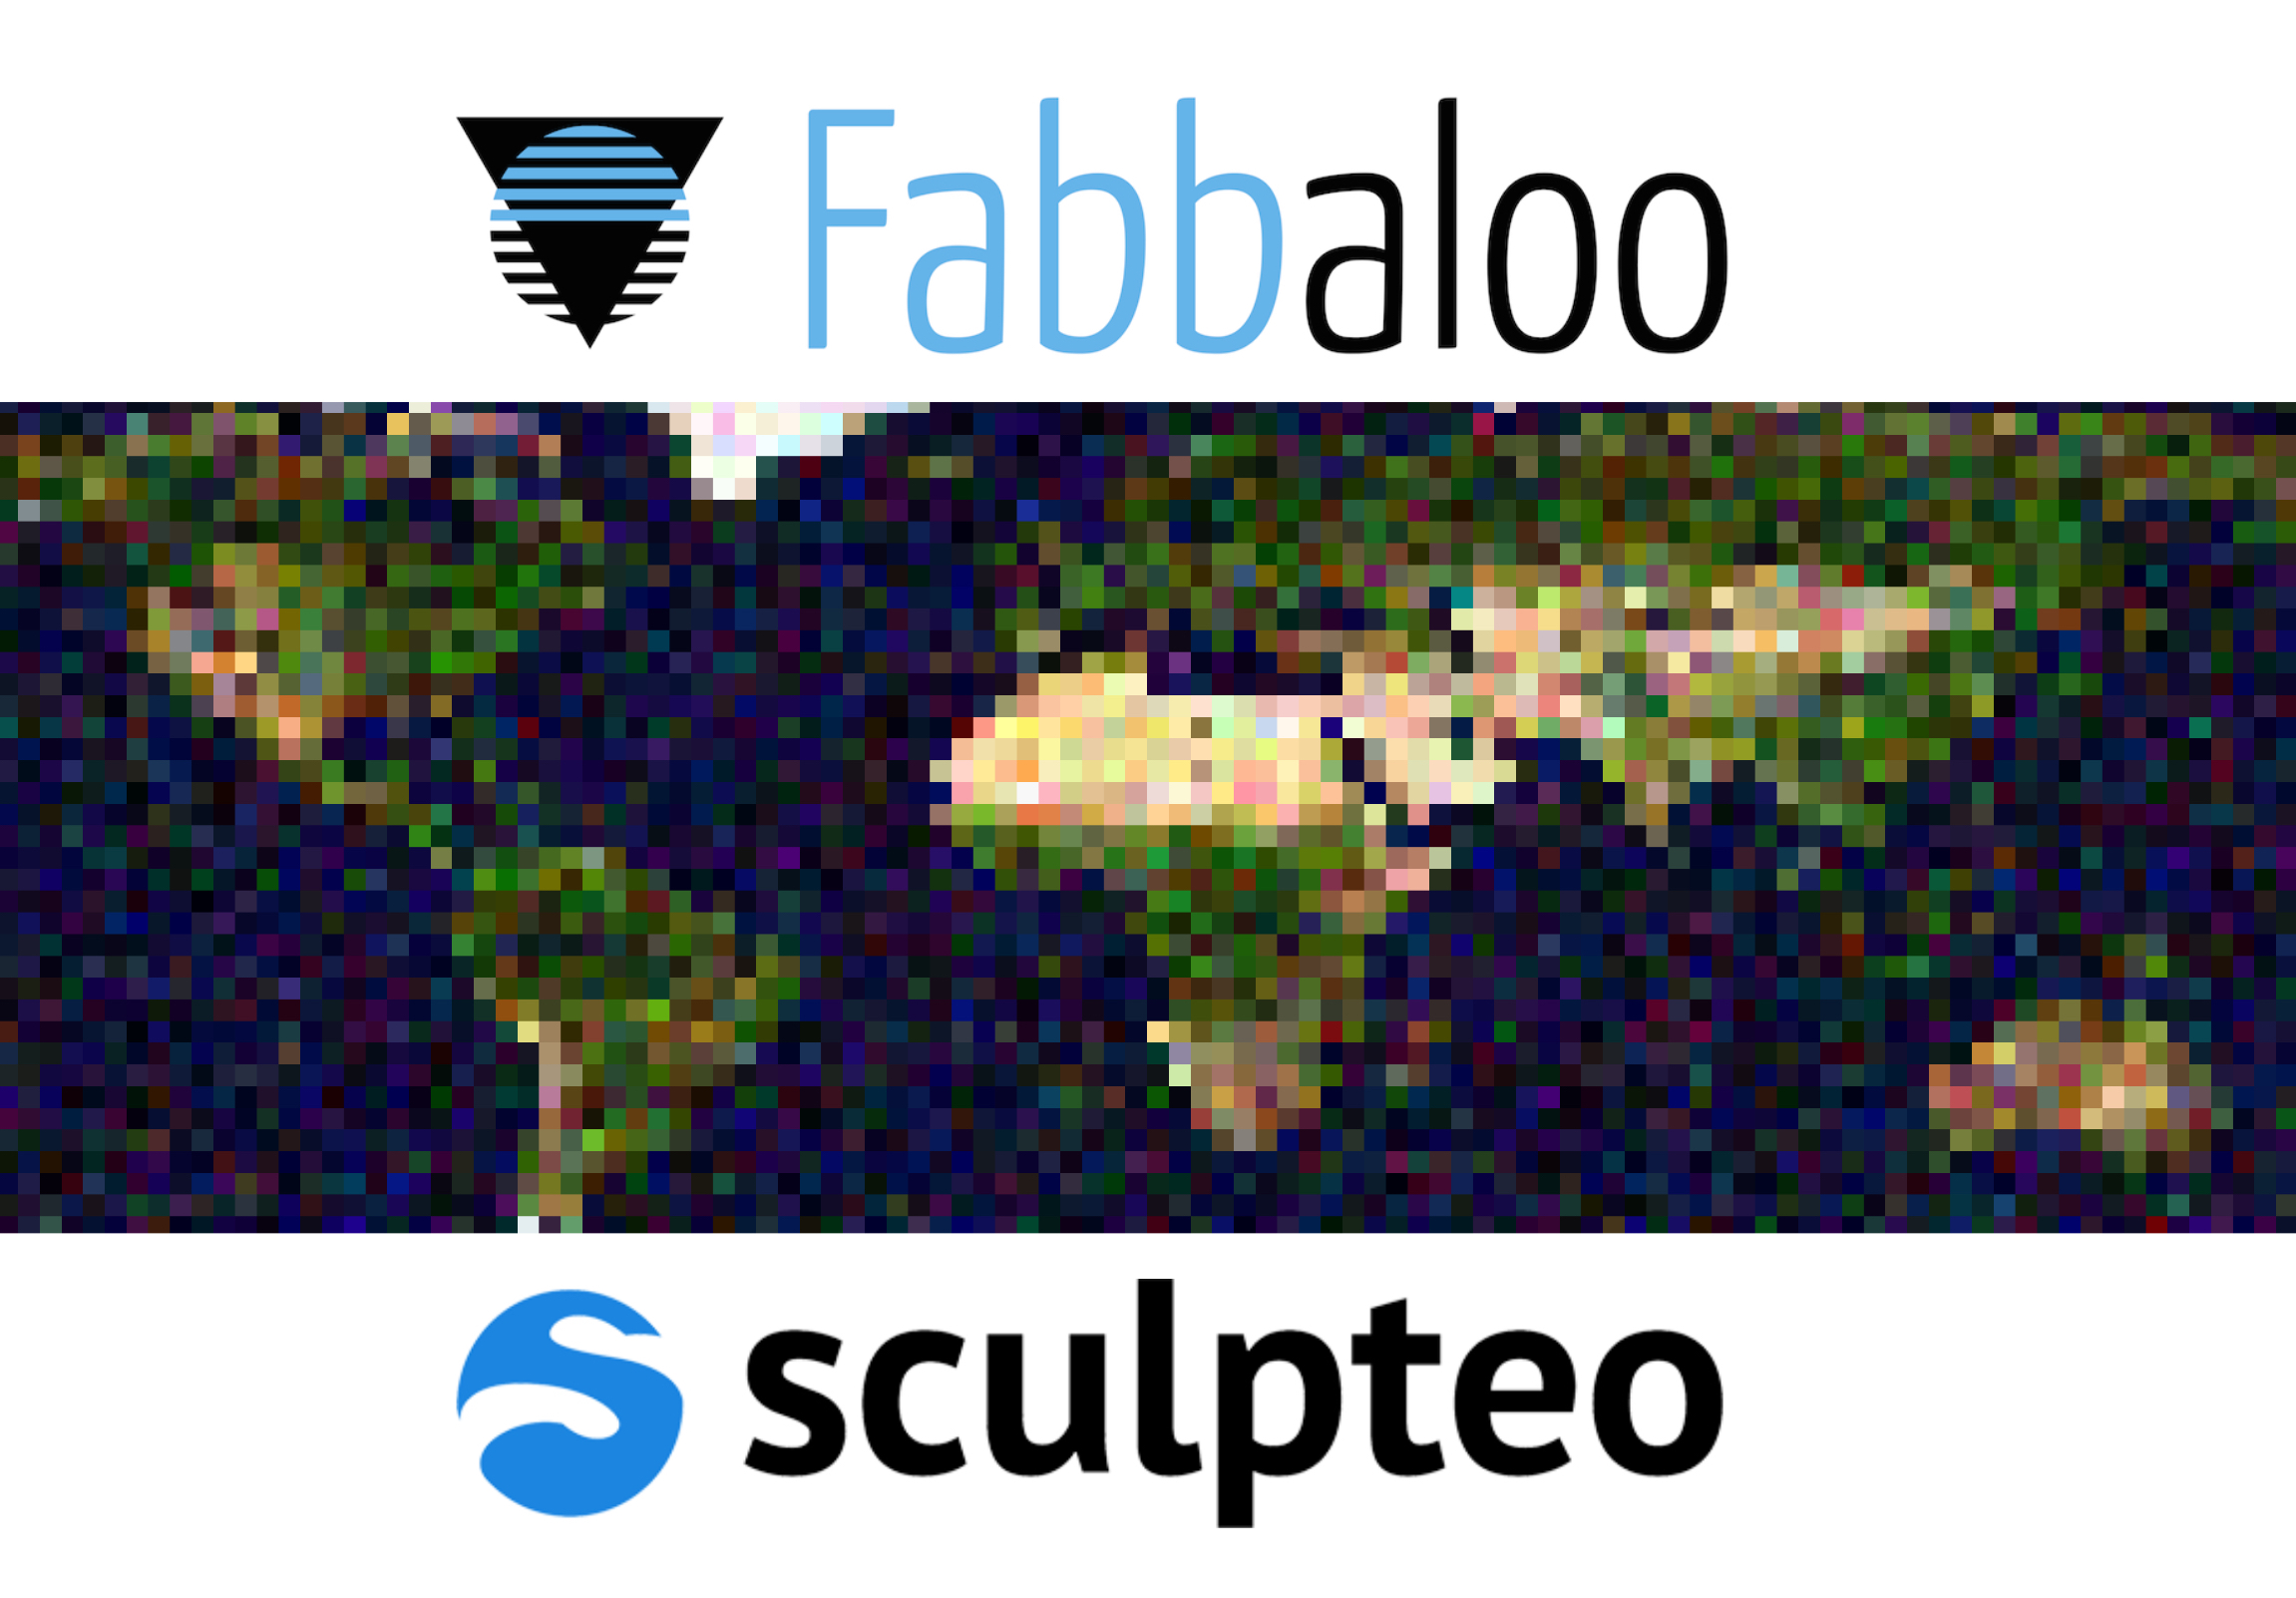  Fabbaloo and Sculpteo team up 